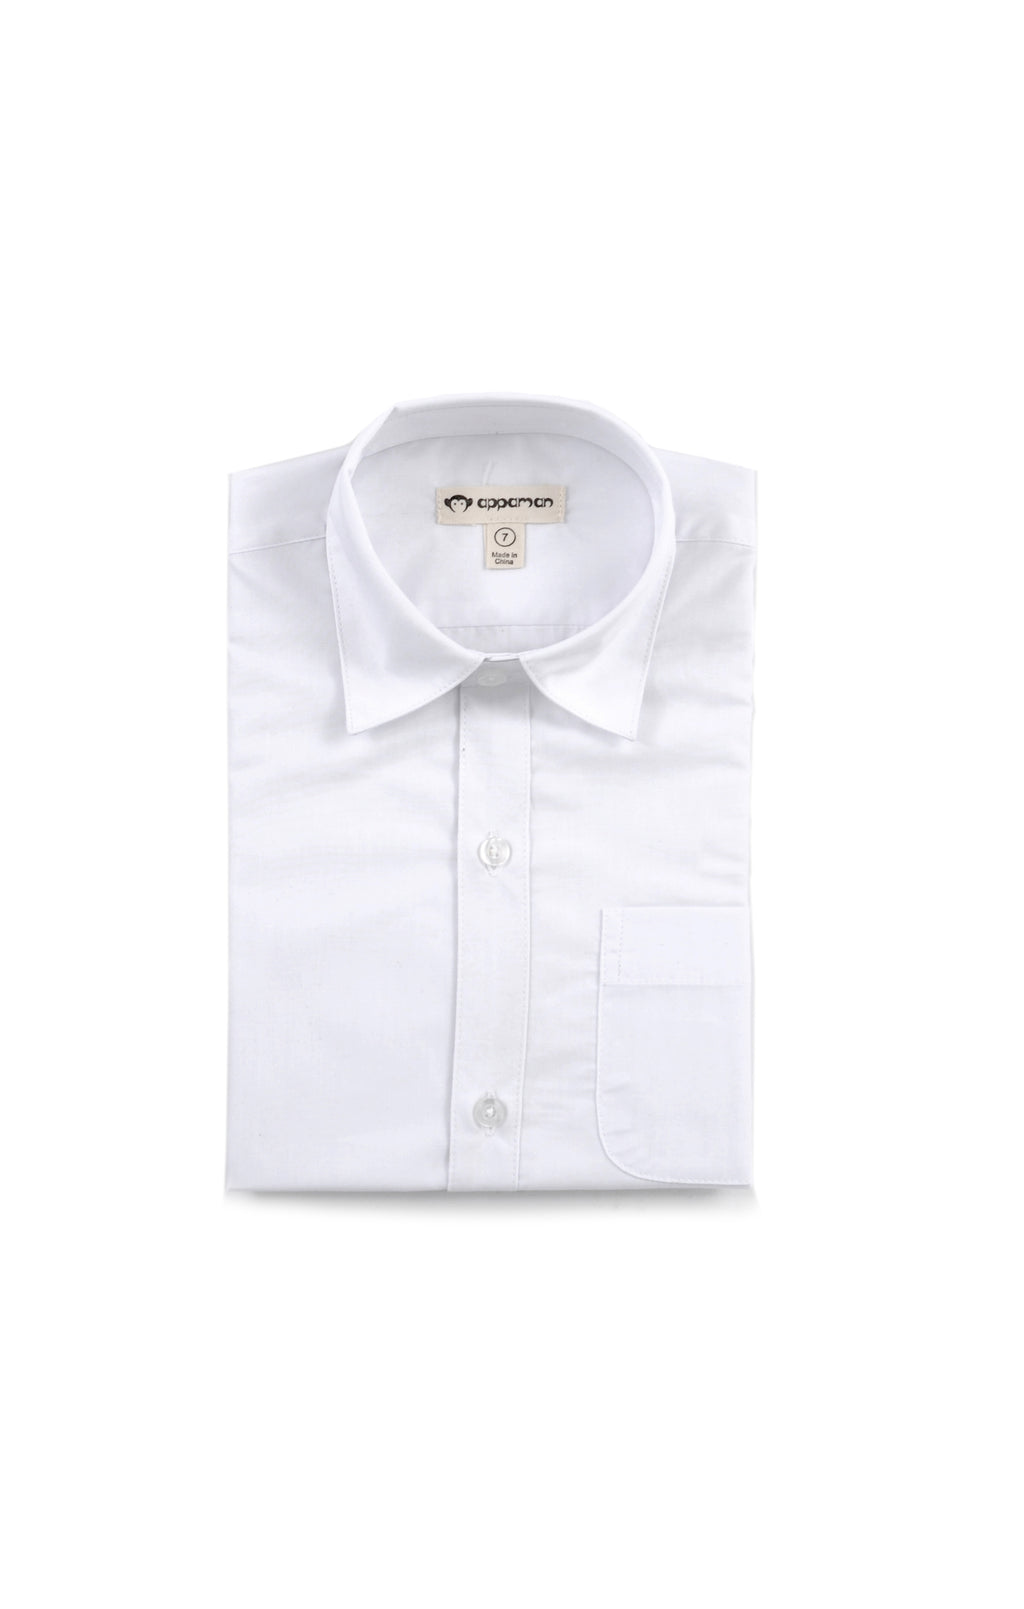 Appaman Dress Shirt - White